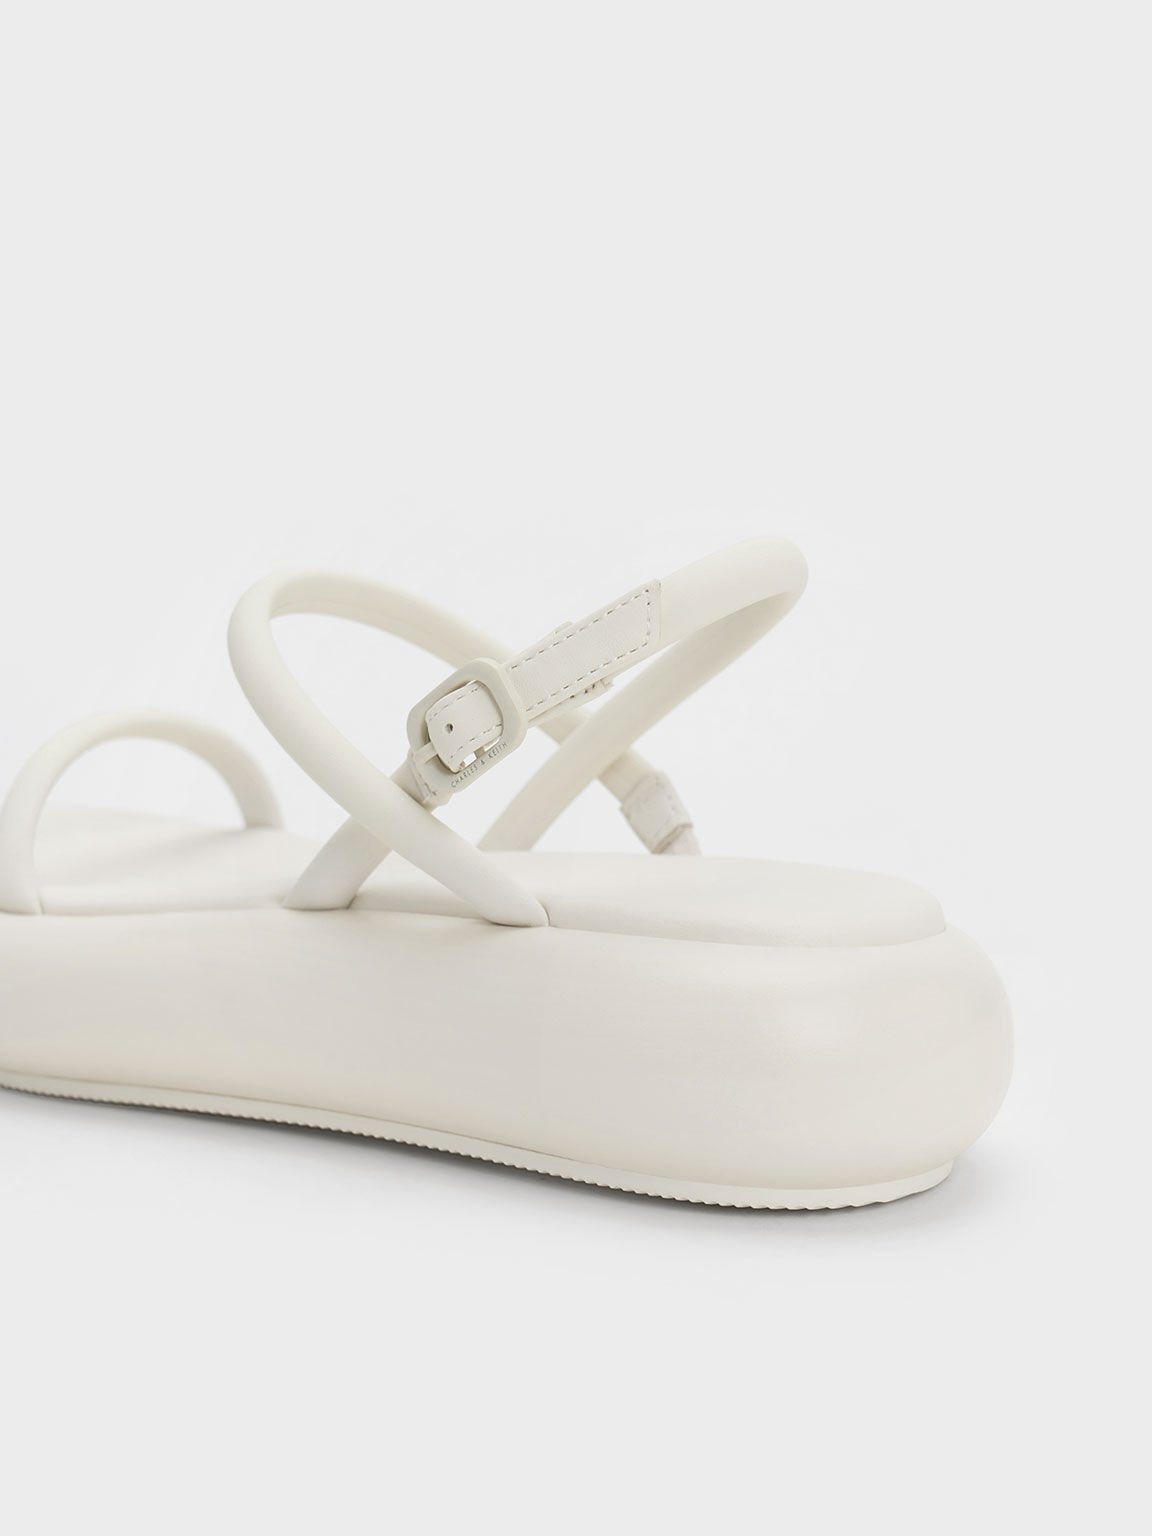 Sandalias acolchadas Keiko con plataforma plana, Blanco tiza, hi-res